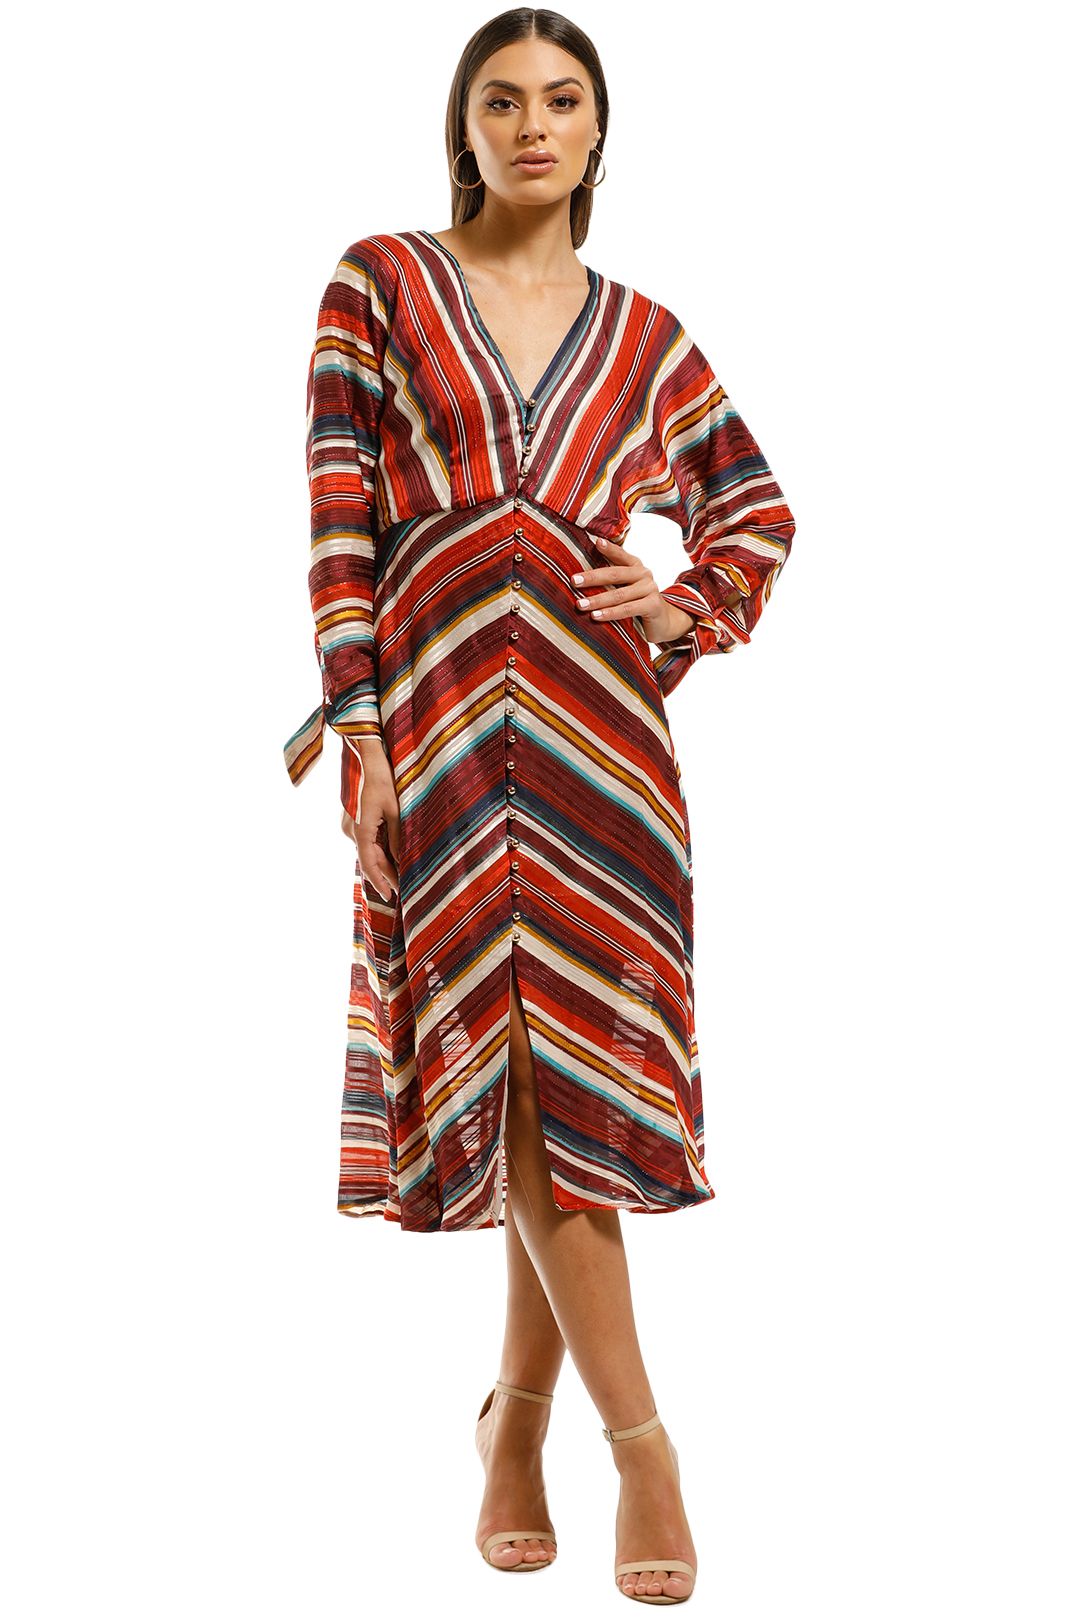 Elliatt-Edie-Dress-Multi-Stripes-Front